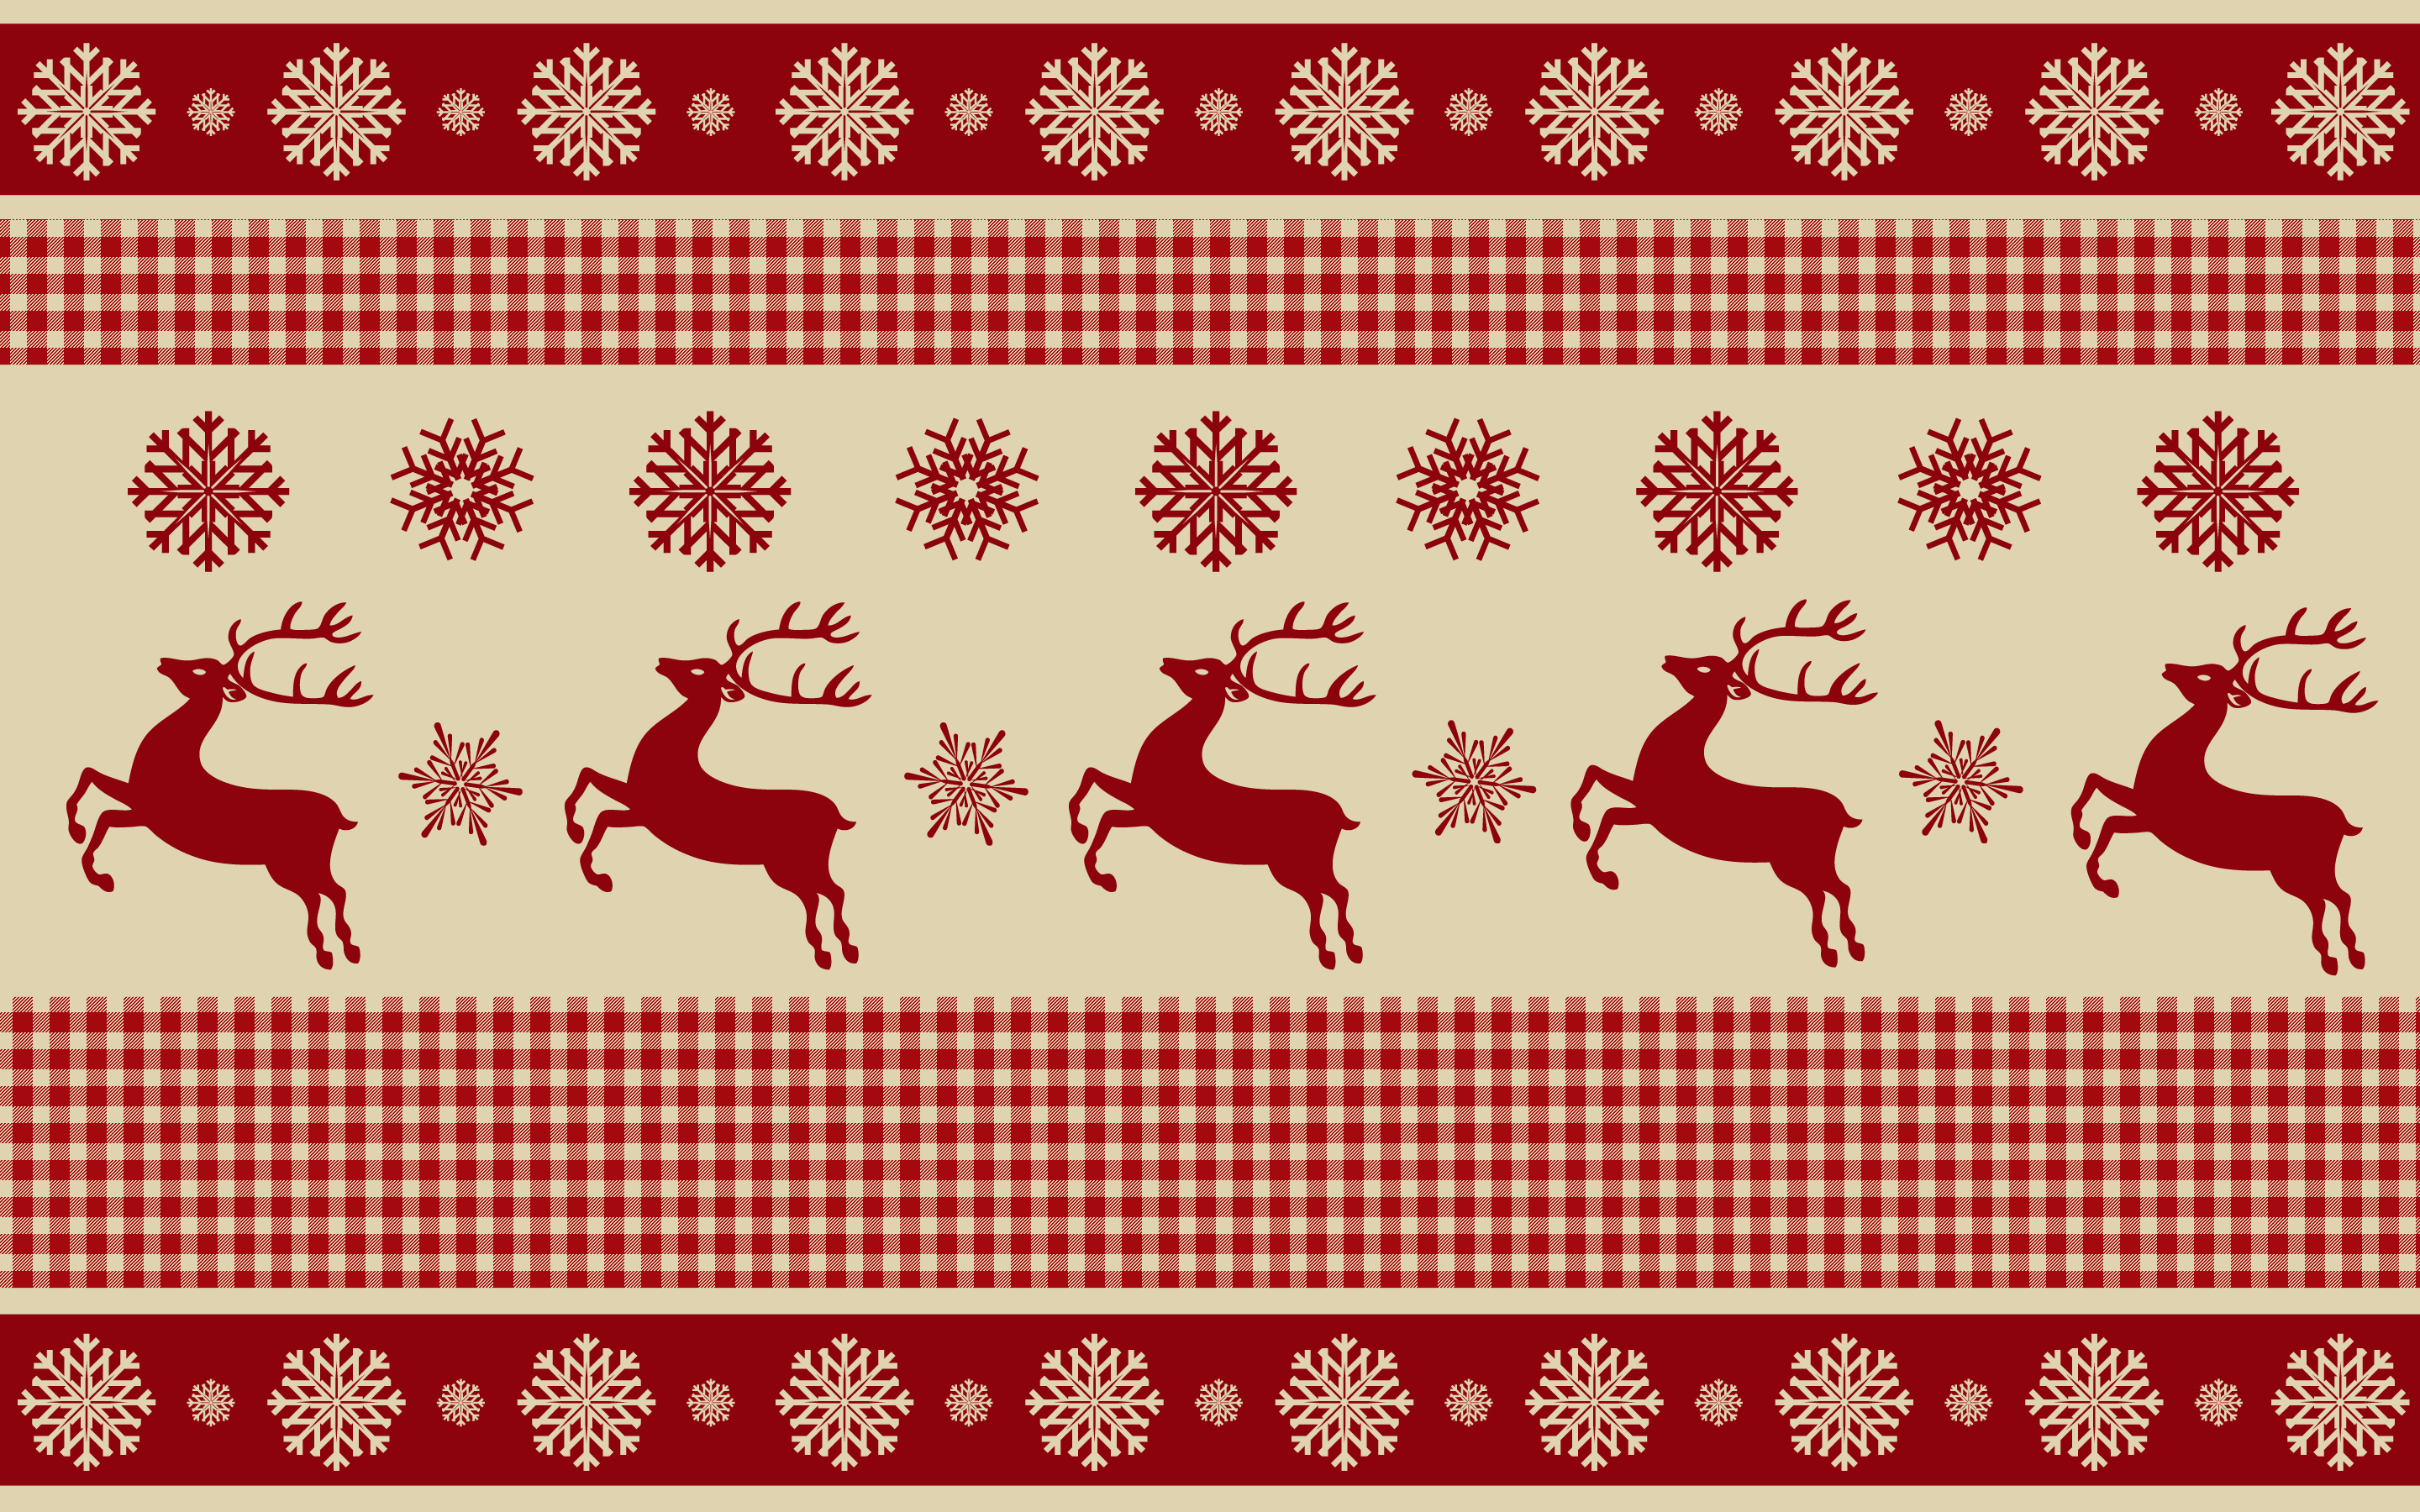 Sweater Wallpaper. Reindeer Sweater Wallpaper, Tight Sweater Wallpaper and Horrible Christmas Sweater Wallpaper